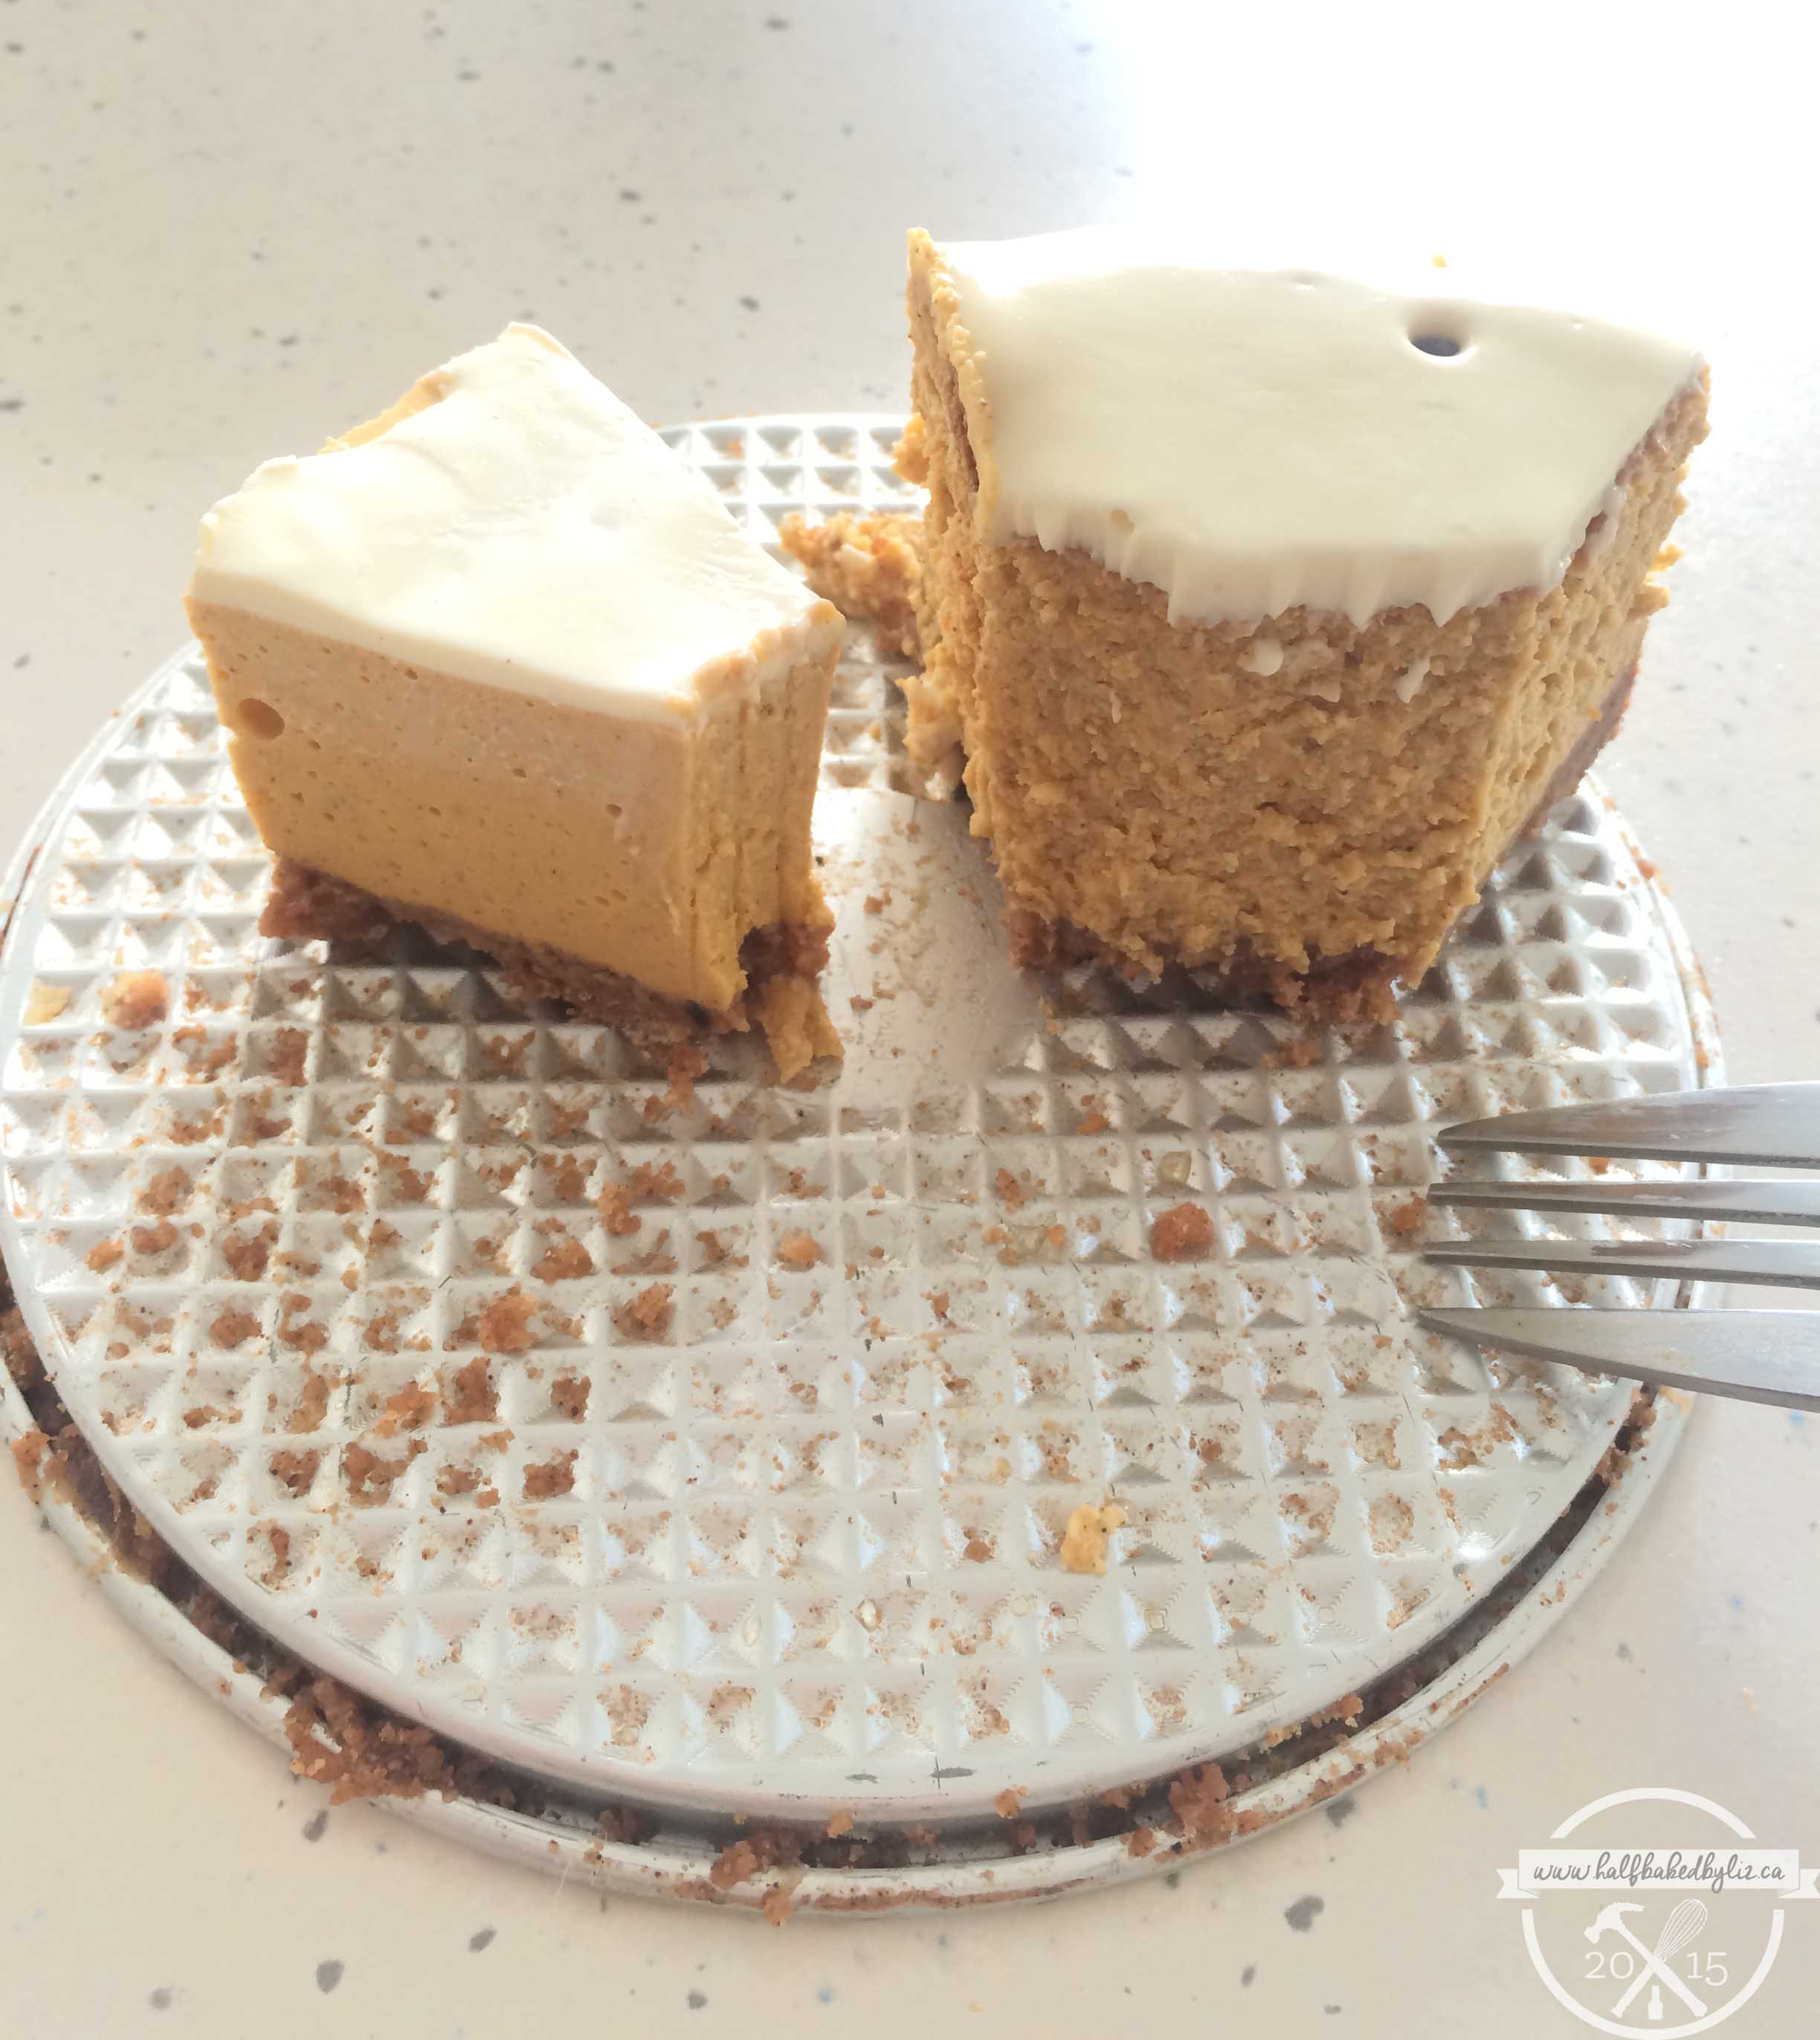 1 - Cheesecake Testing